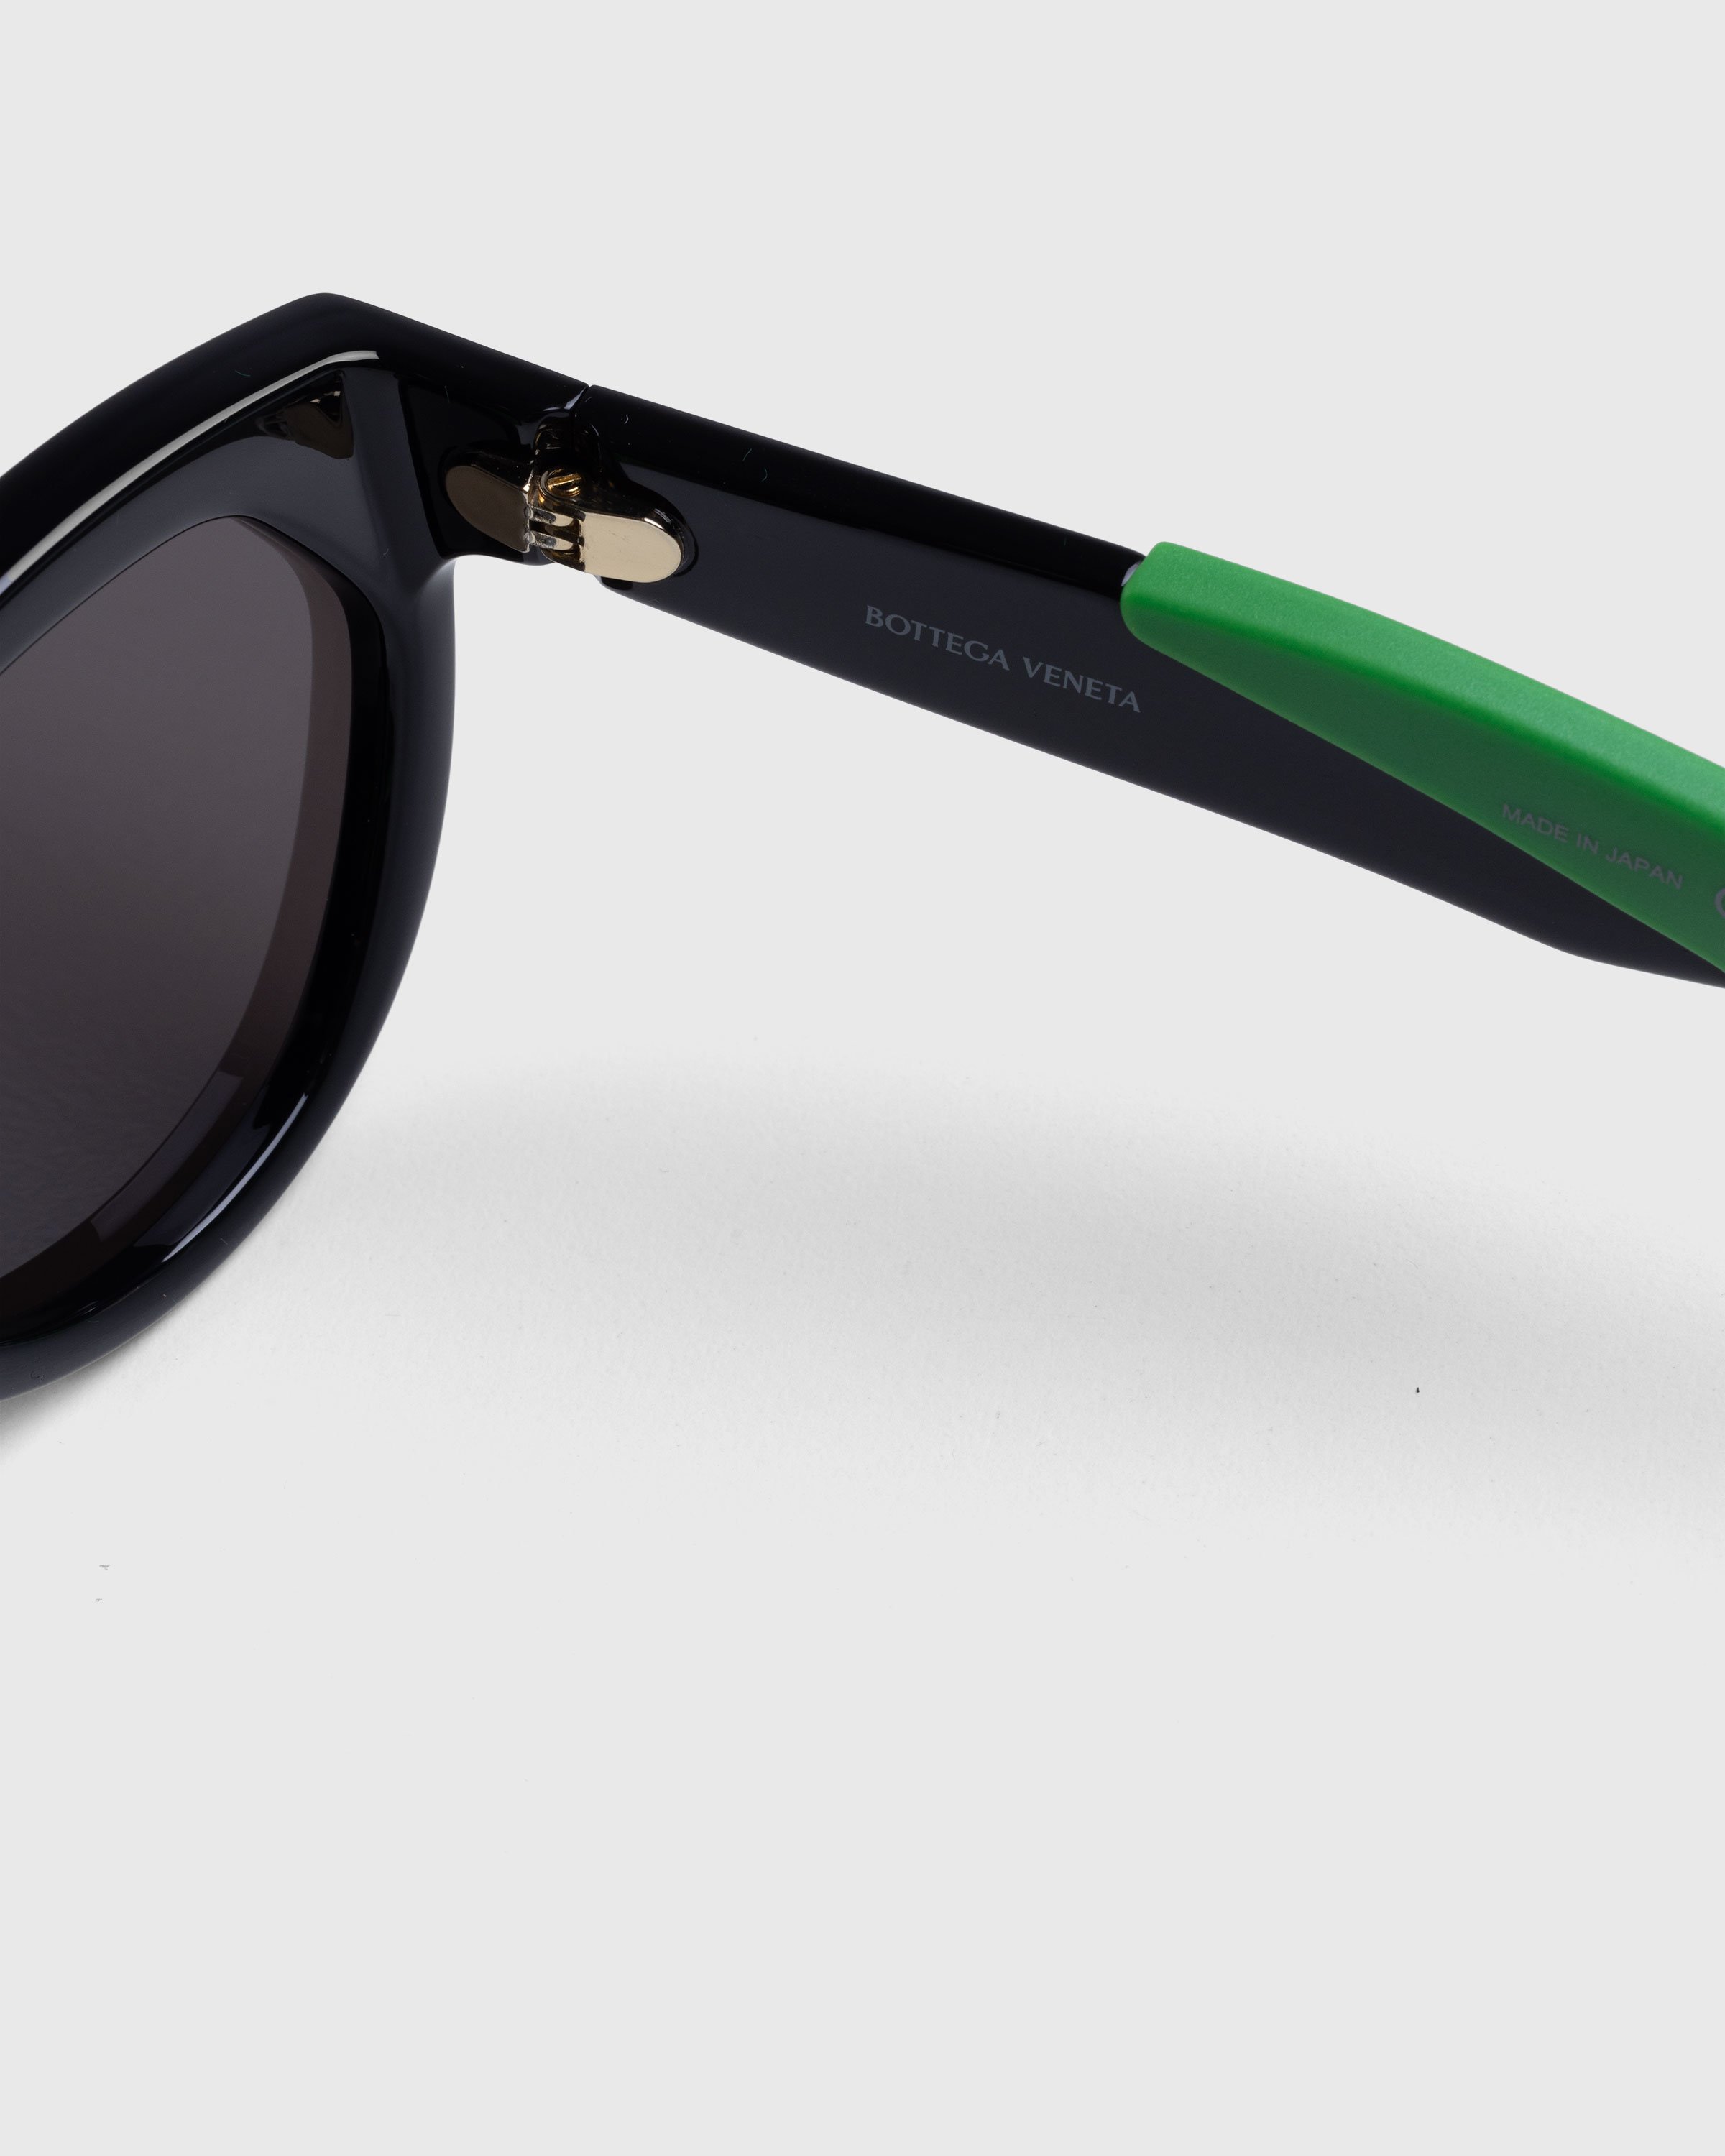 Bottega Veneta - Mitre Square Rounded Injected Acetate Sunglasses Black/Green - Accessories - Black - Image 3